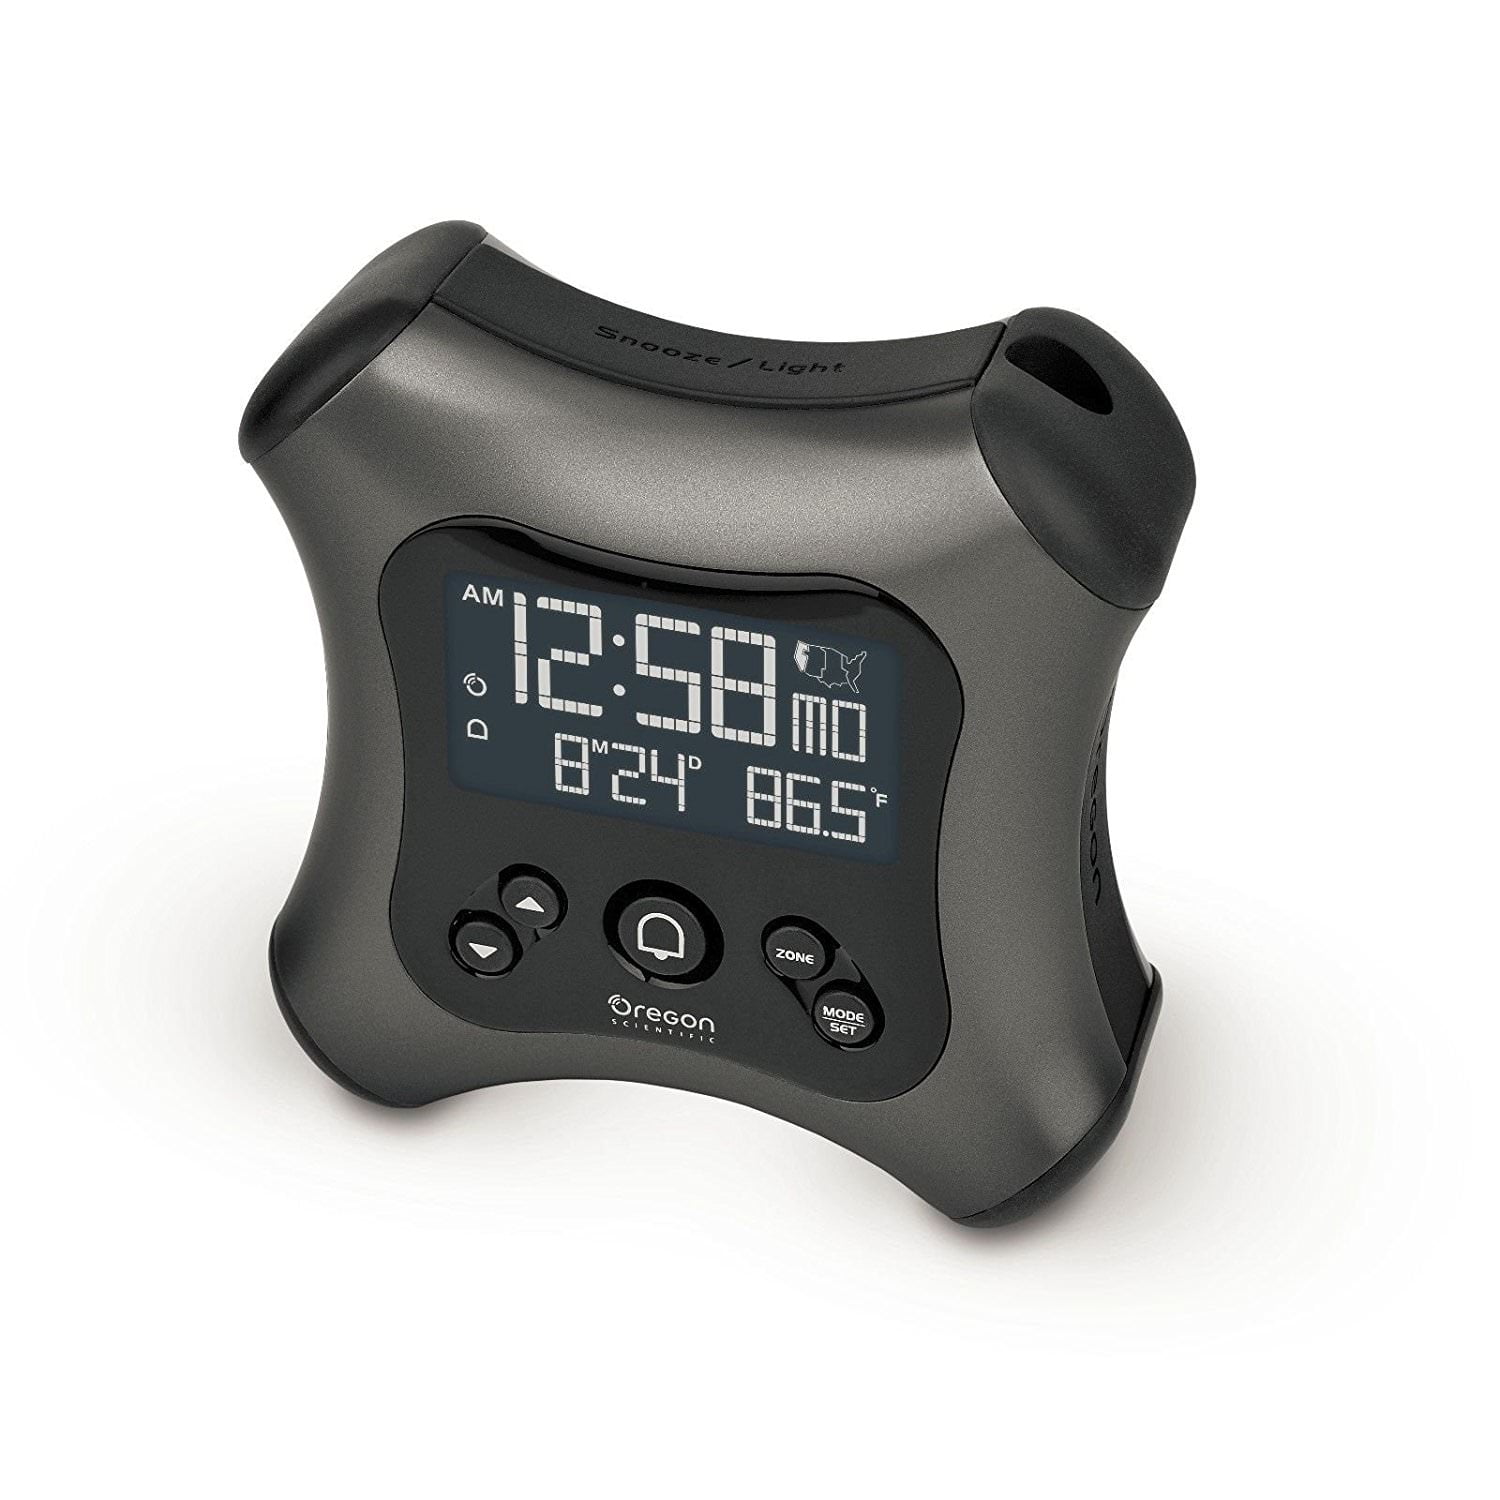 Scientific RM330P Projection Alarm Clock with Calendar for Home Bedroom - Walmart.com